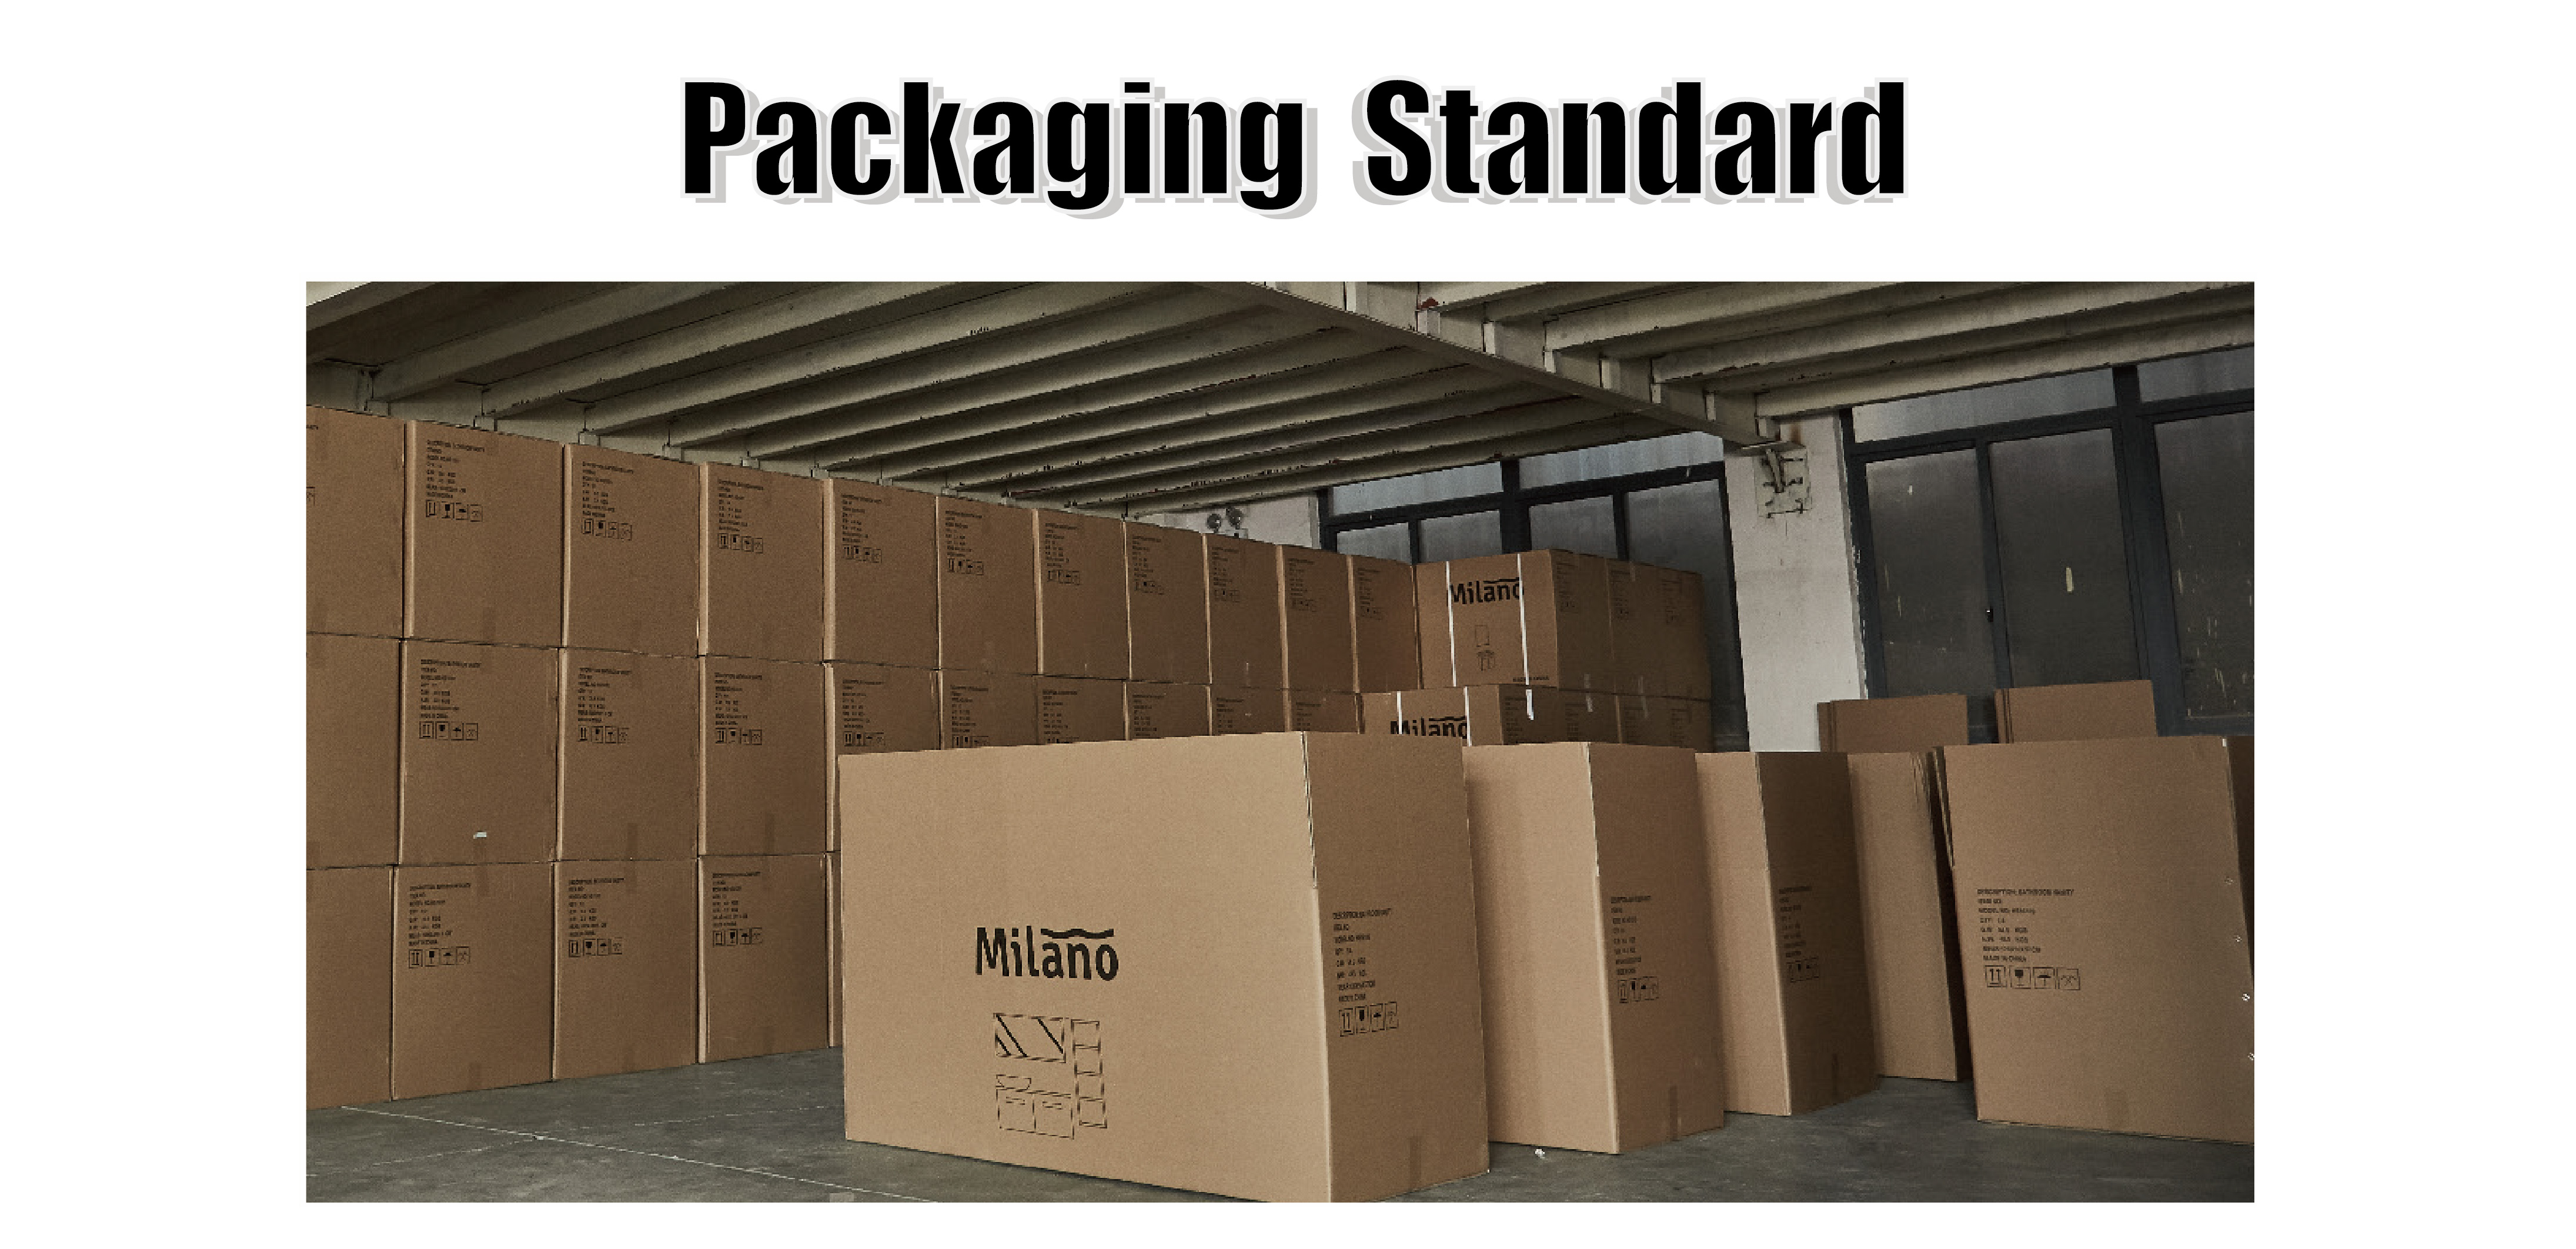 Entop Package Standard